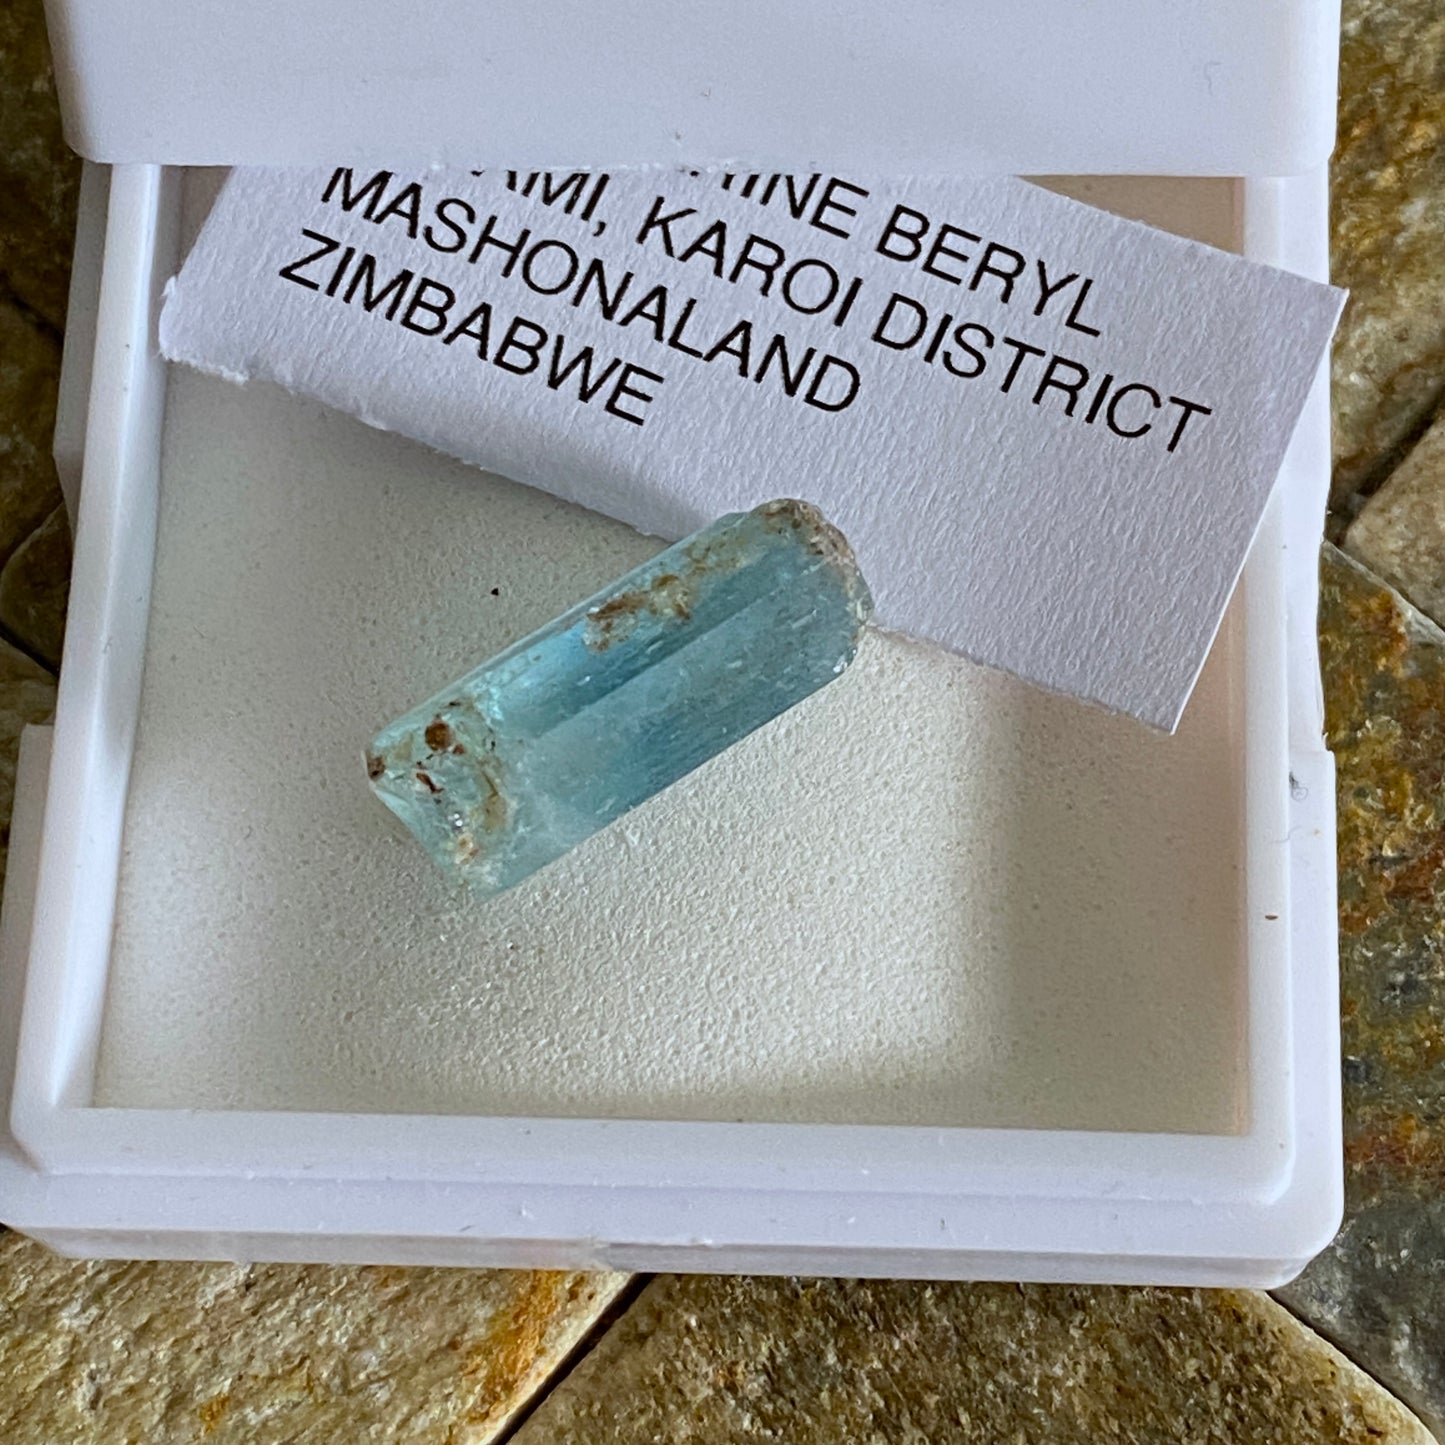 AQUAMARINE BERYL CRYSTAL FROM MWAMI, ZIMBABWE. 1g [5Ct] MF1775